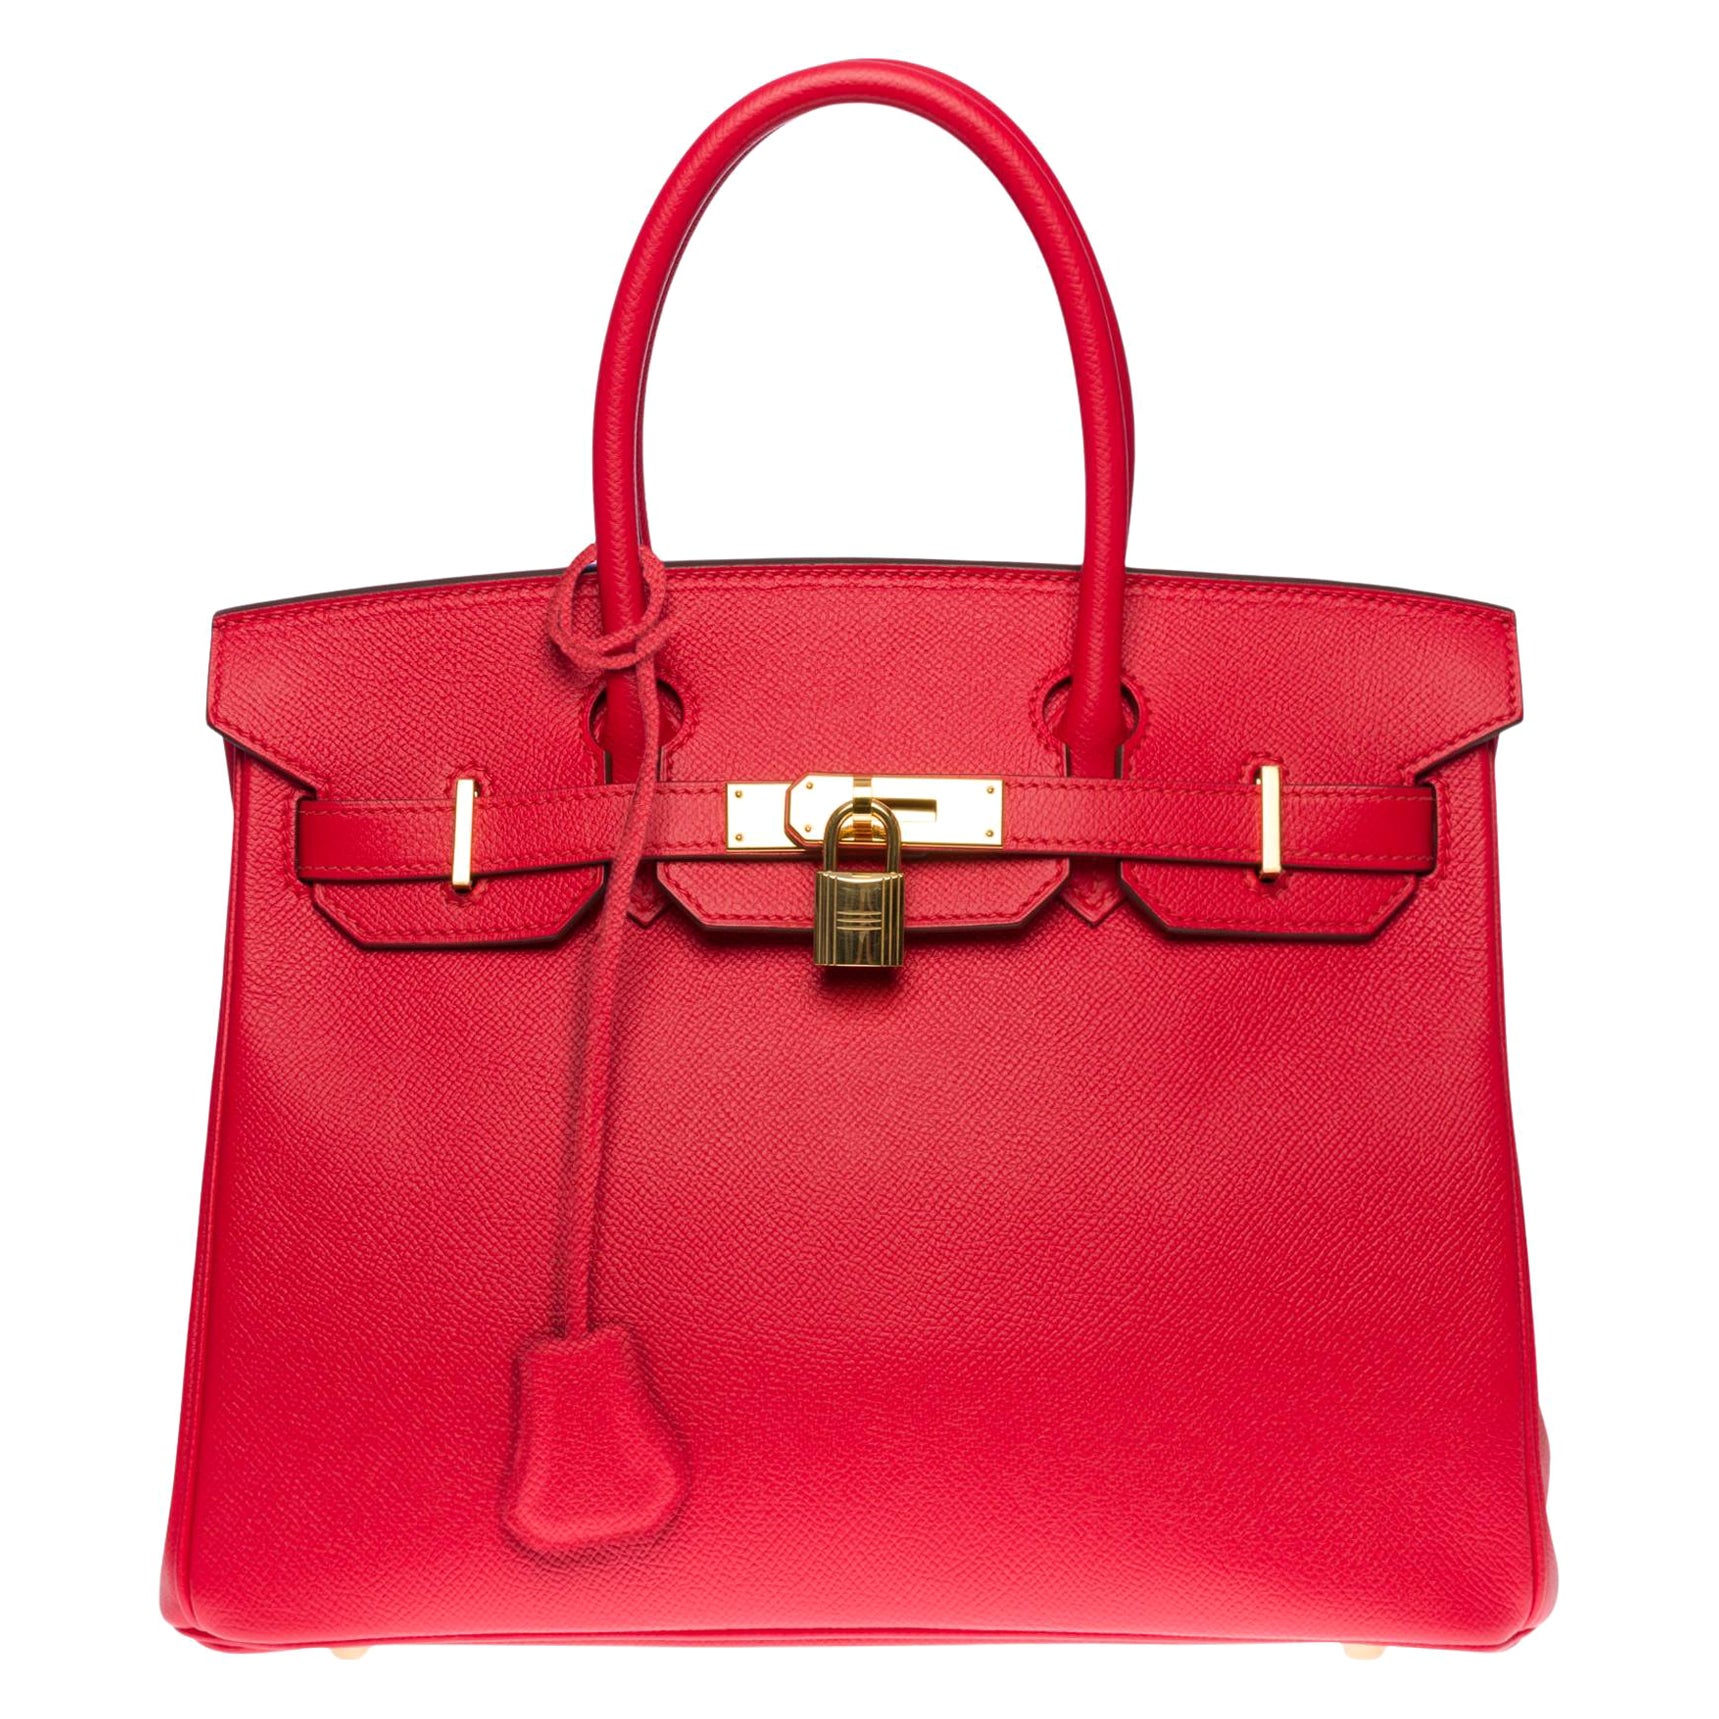 Stunning Hermès Birkin 30 handbag in Rouge de Coeur Epsom leather, GHW For Sale